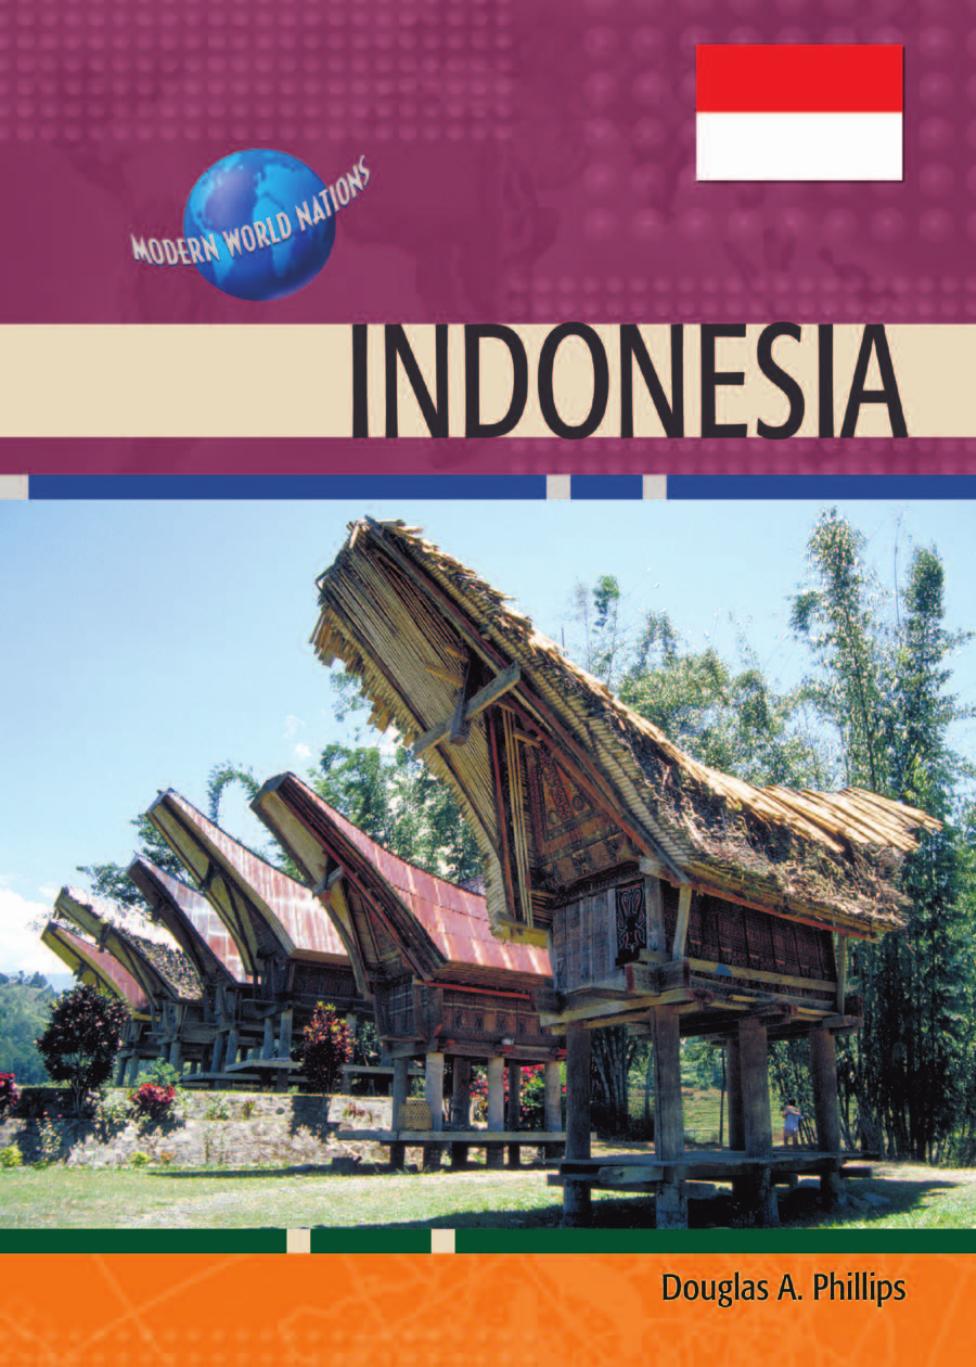 Indonesia (Modern World Nations)